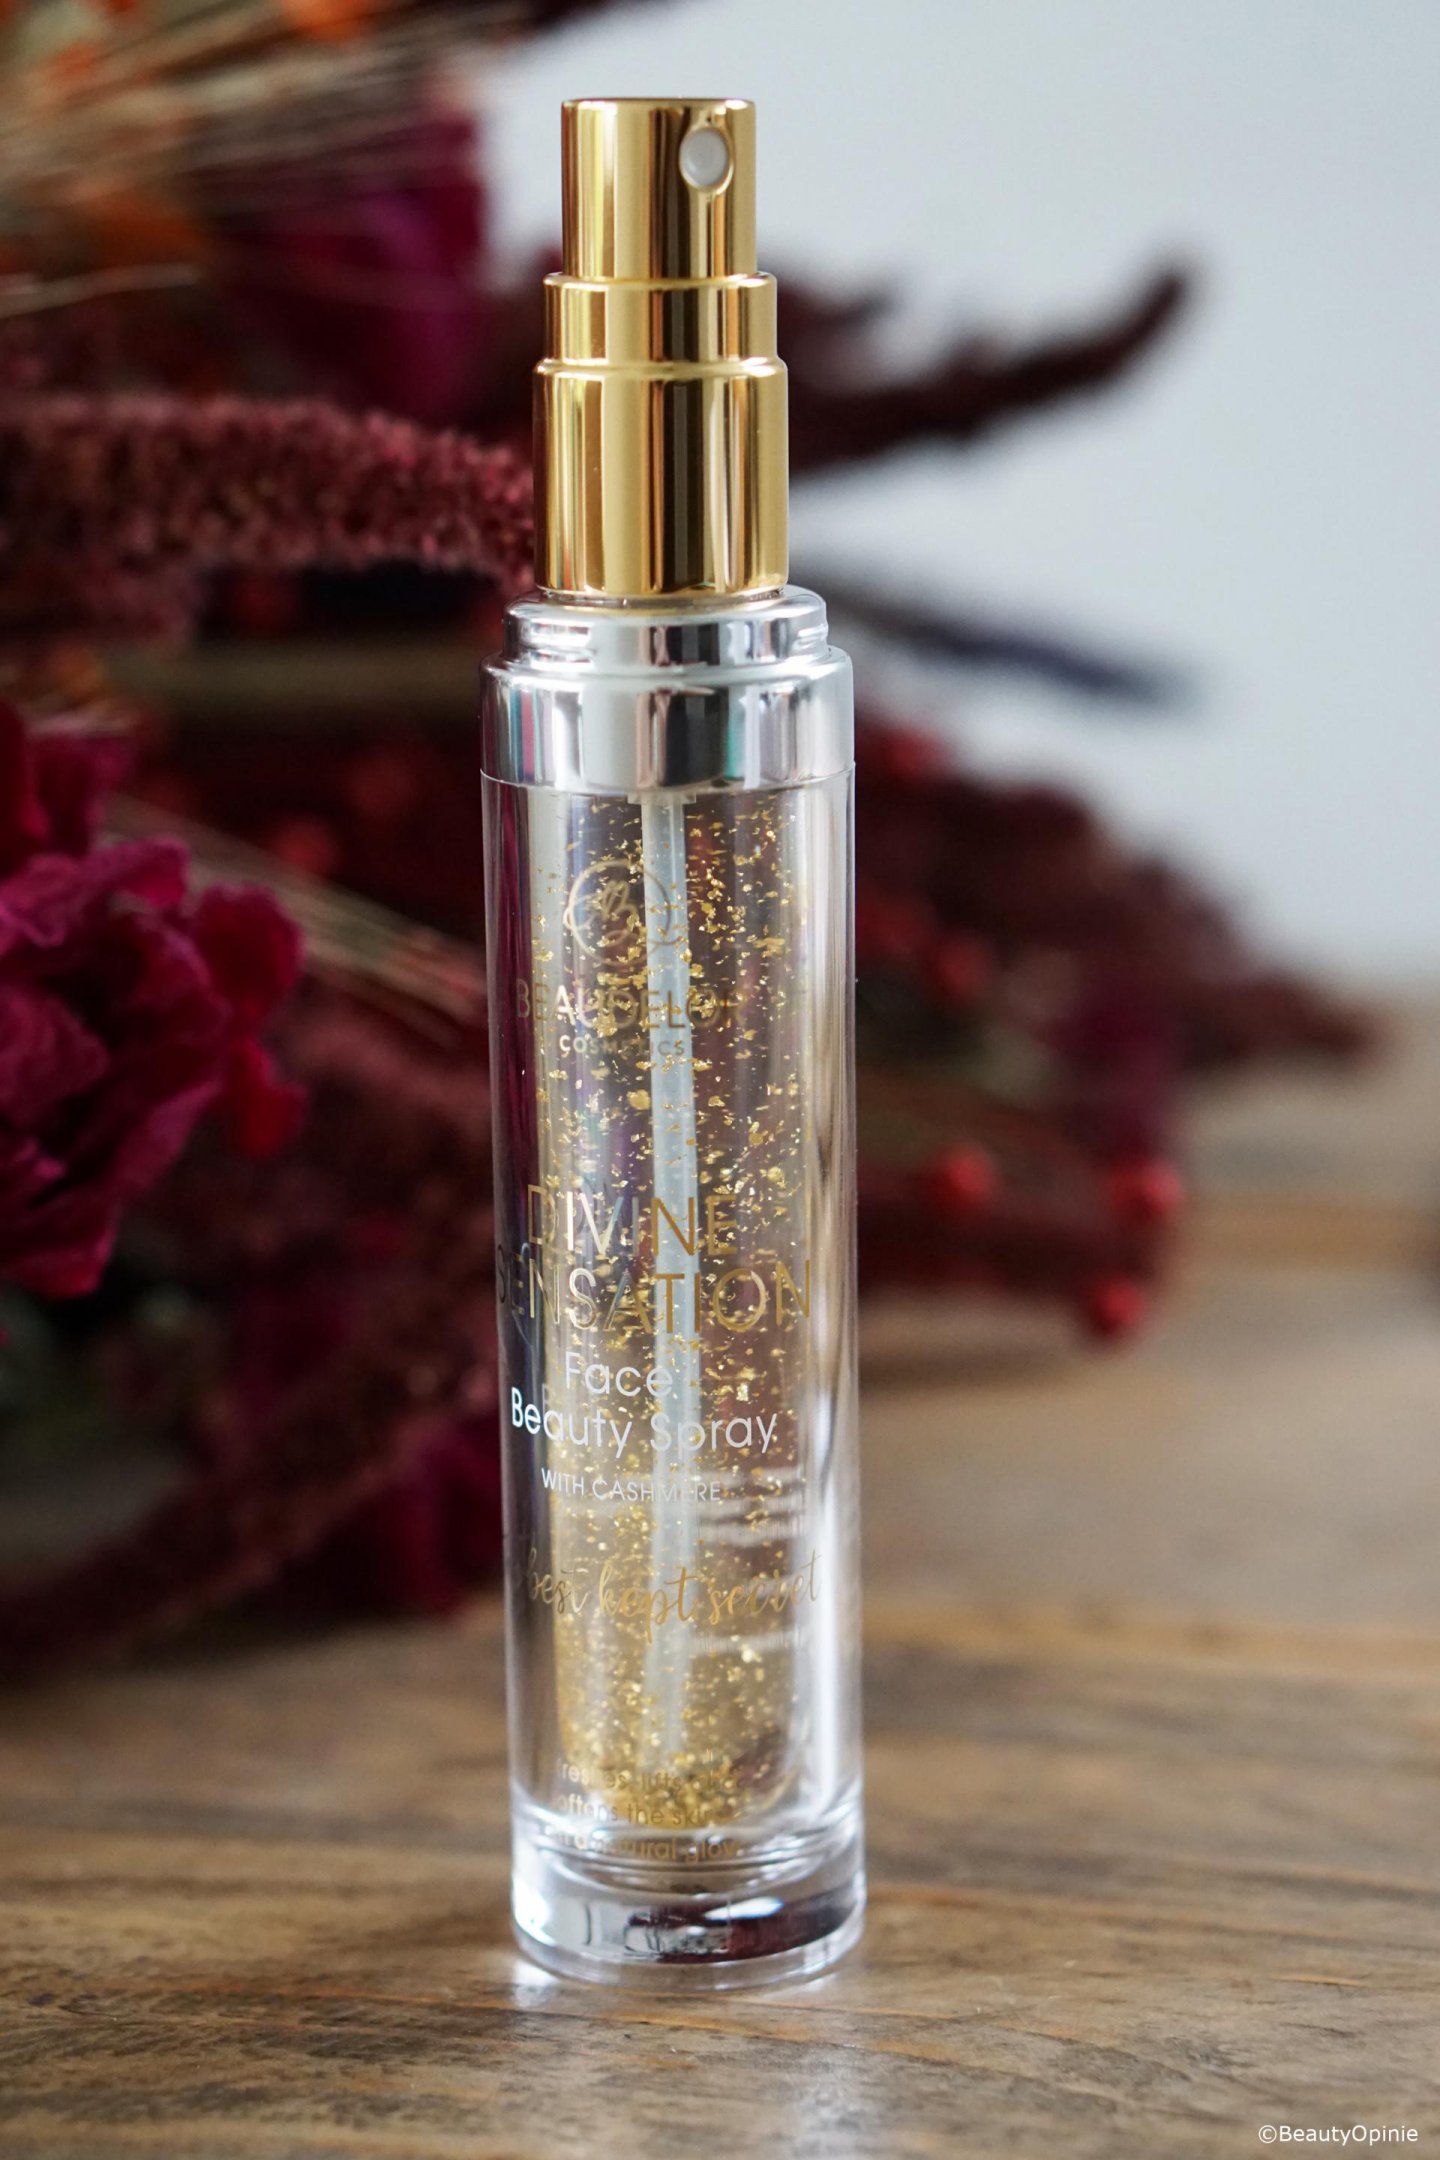 Beaudelor - Divine sensation face beauty spray review